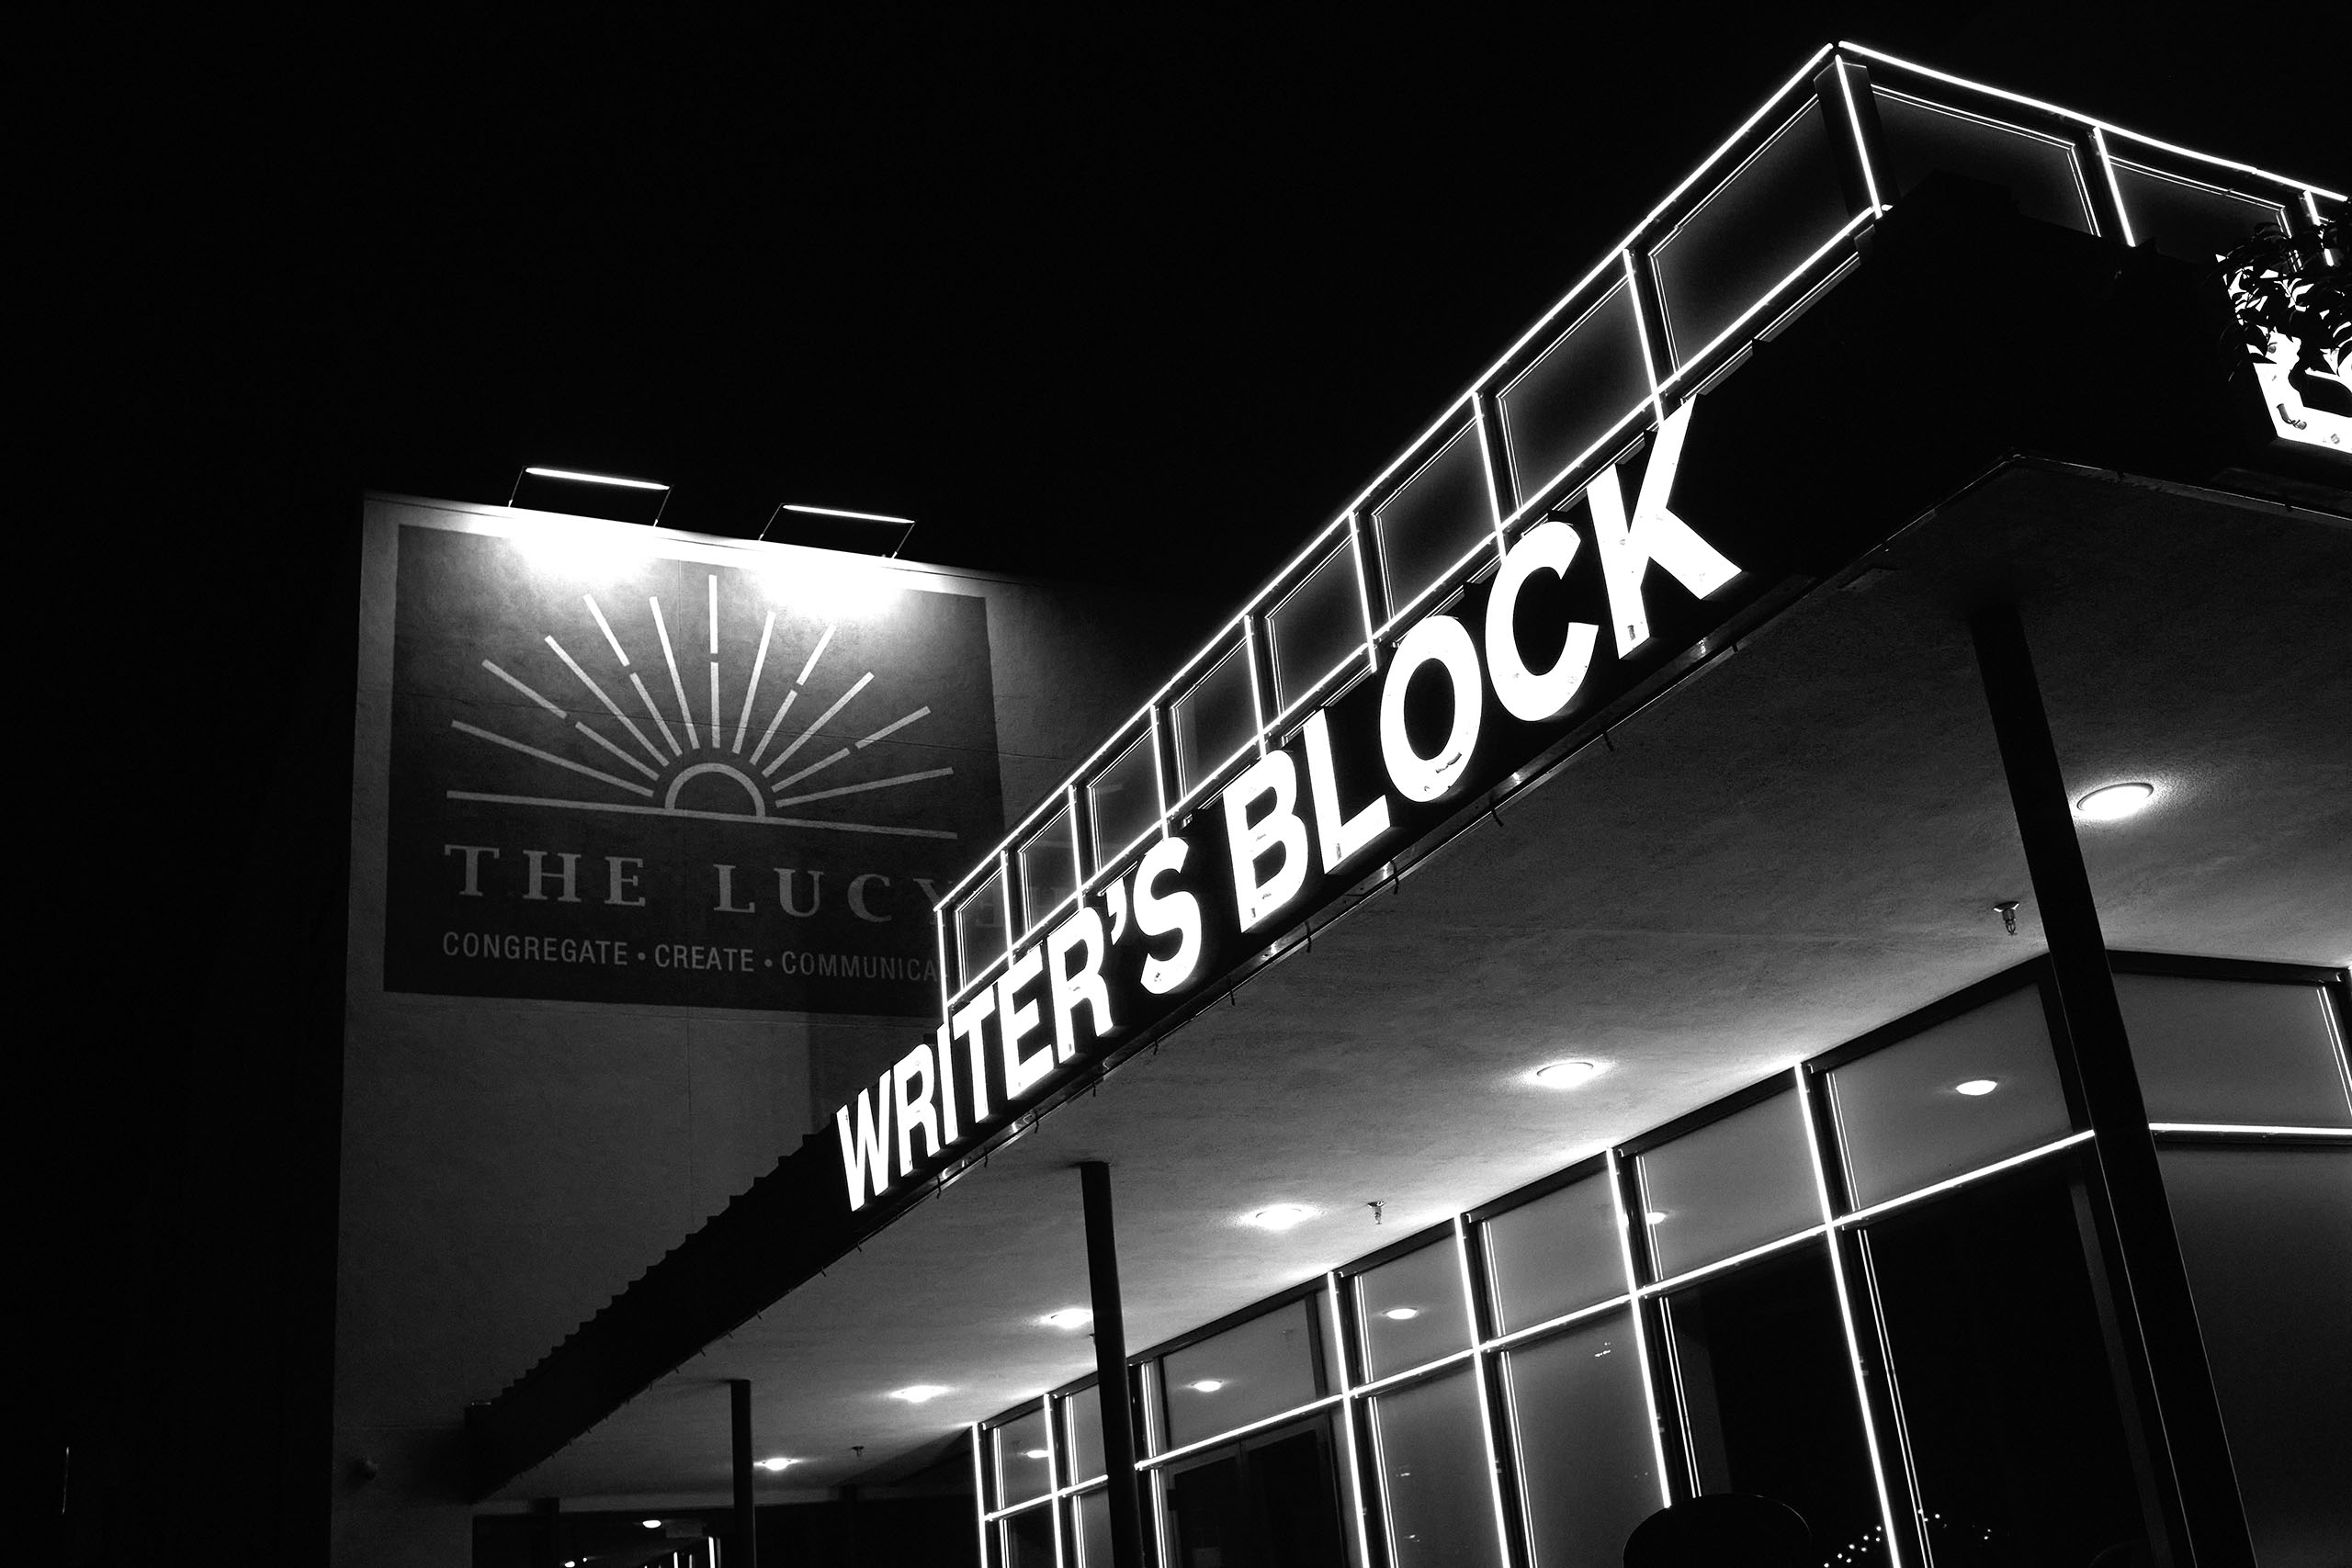 The Writer's Block exterior signage.